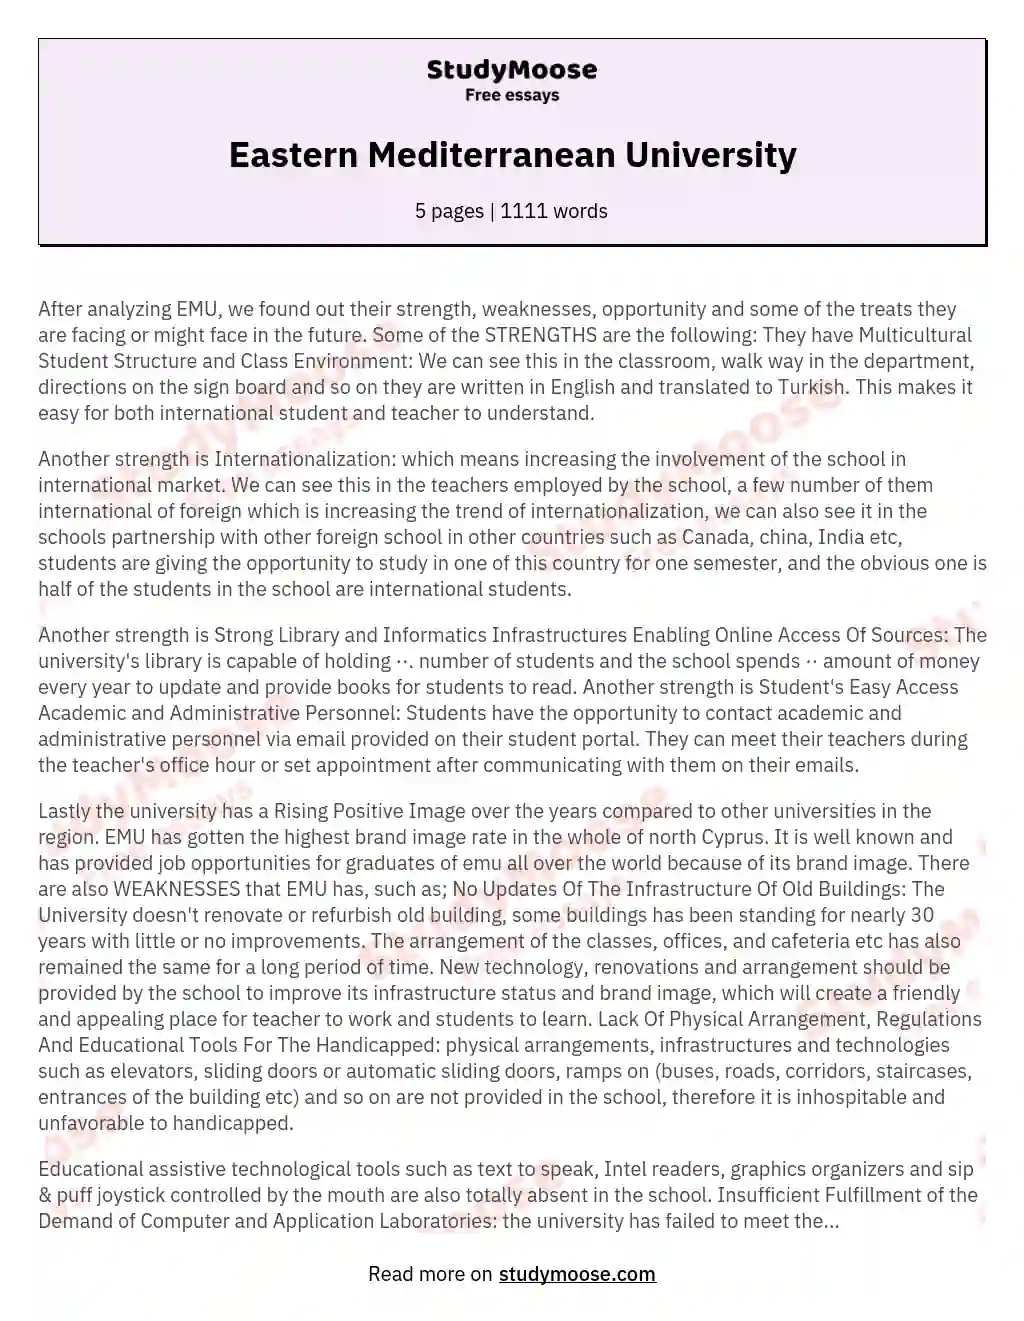 Eastern Mediterranean University essay